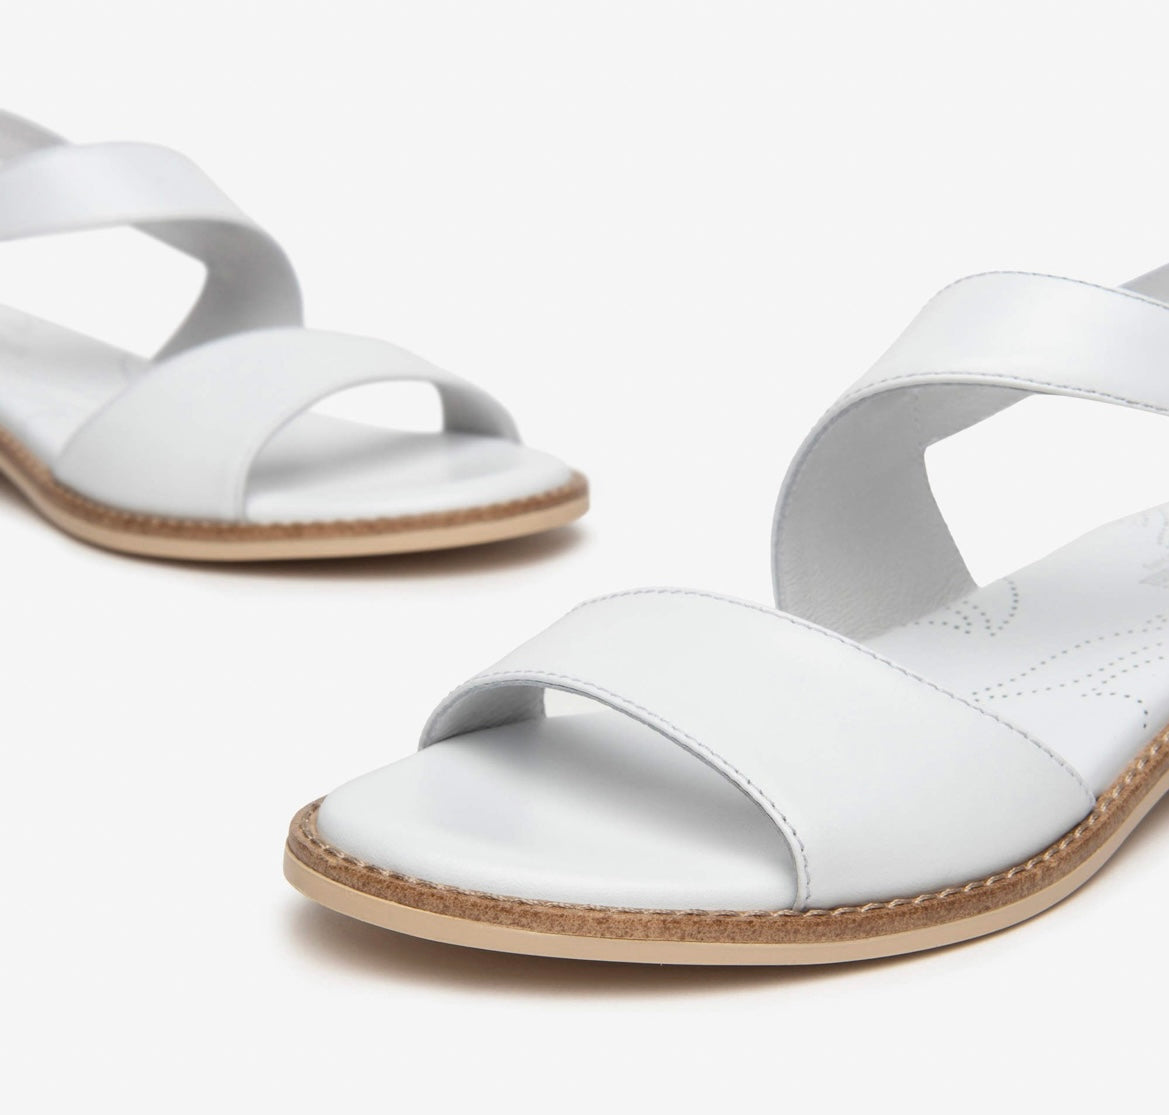 Nerogiardini white leather sandals